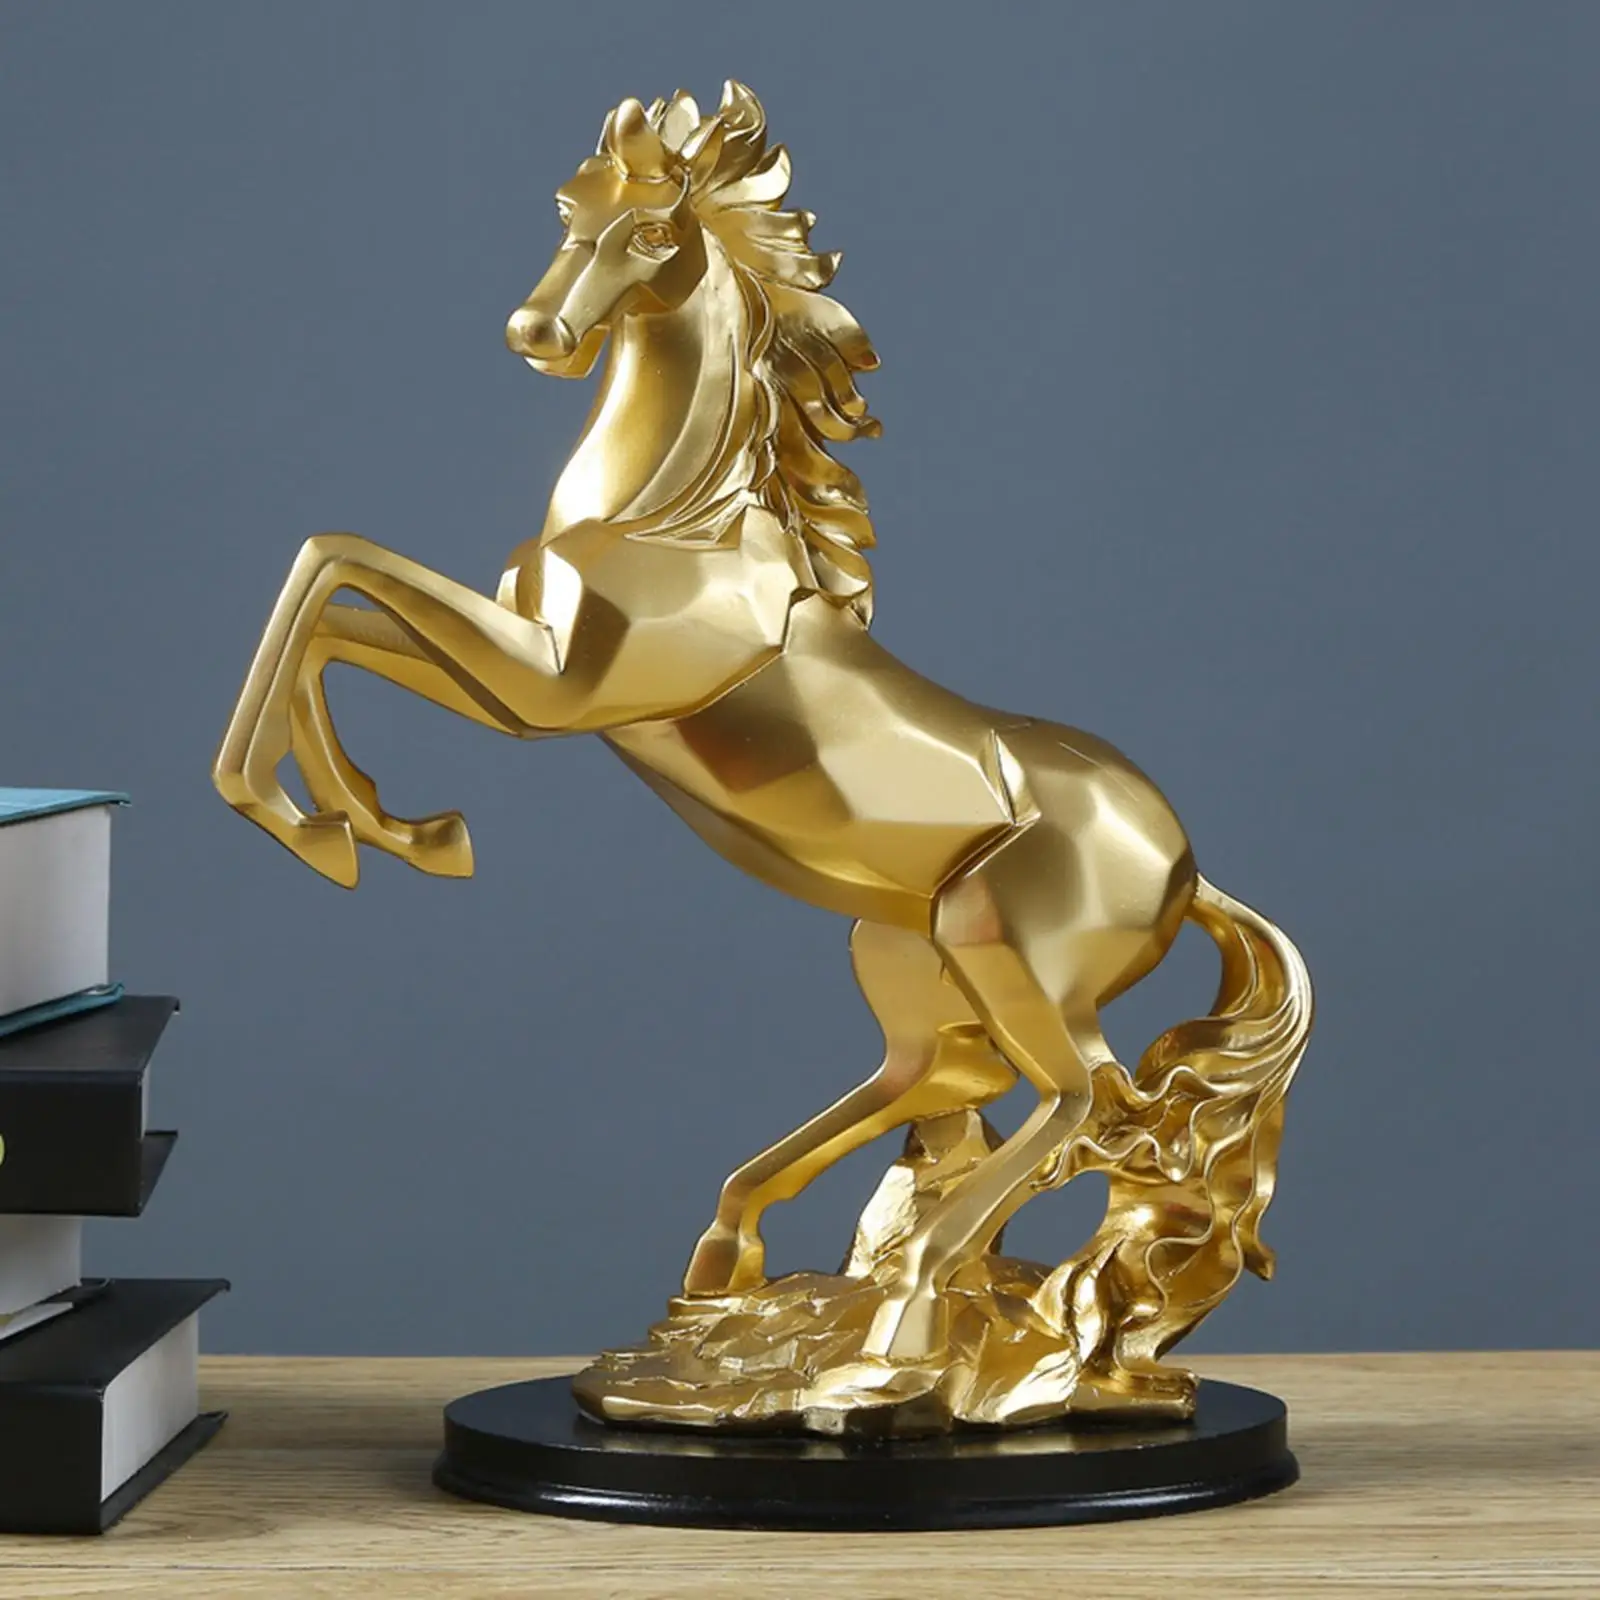 Horse Statuette Figurine Good Lucky Artwork for Desk Christmas Gifts Decor